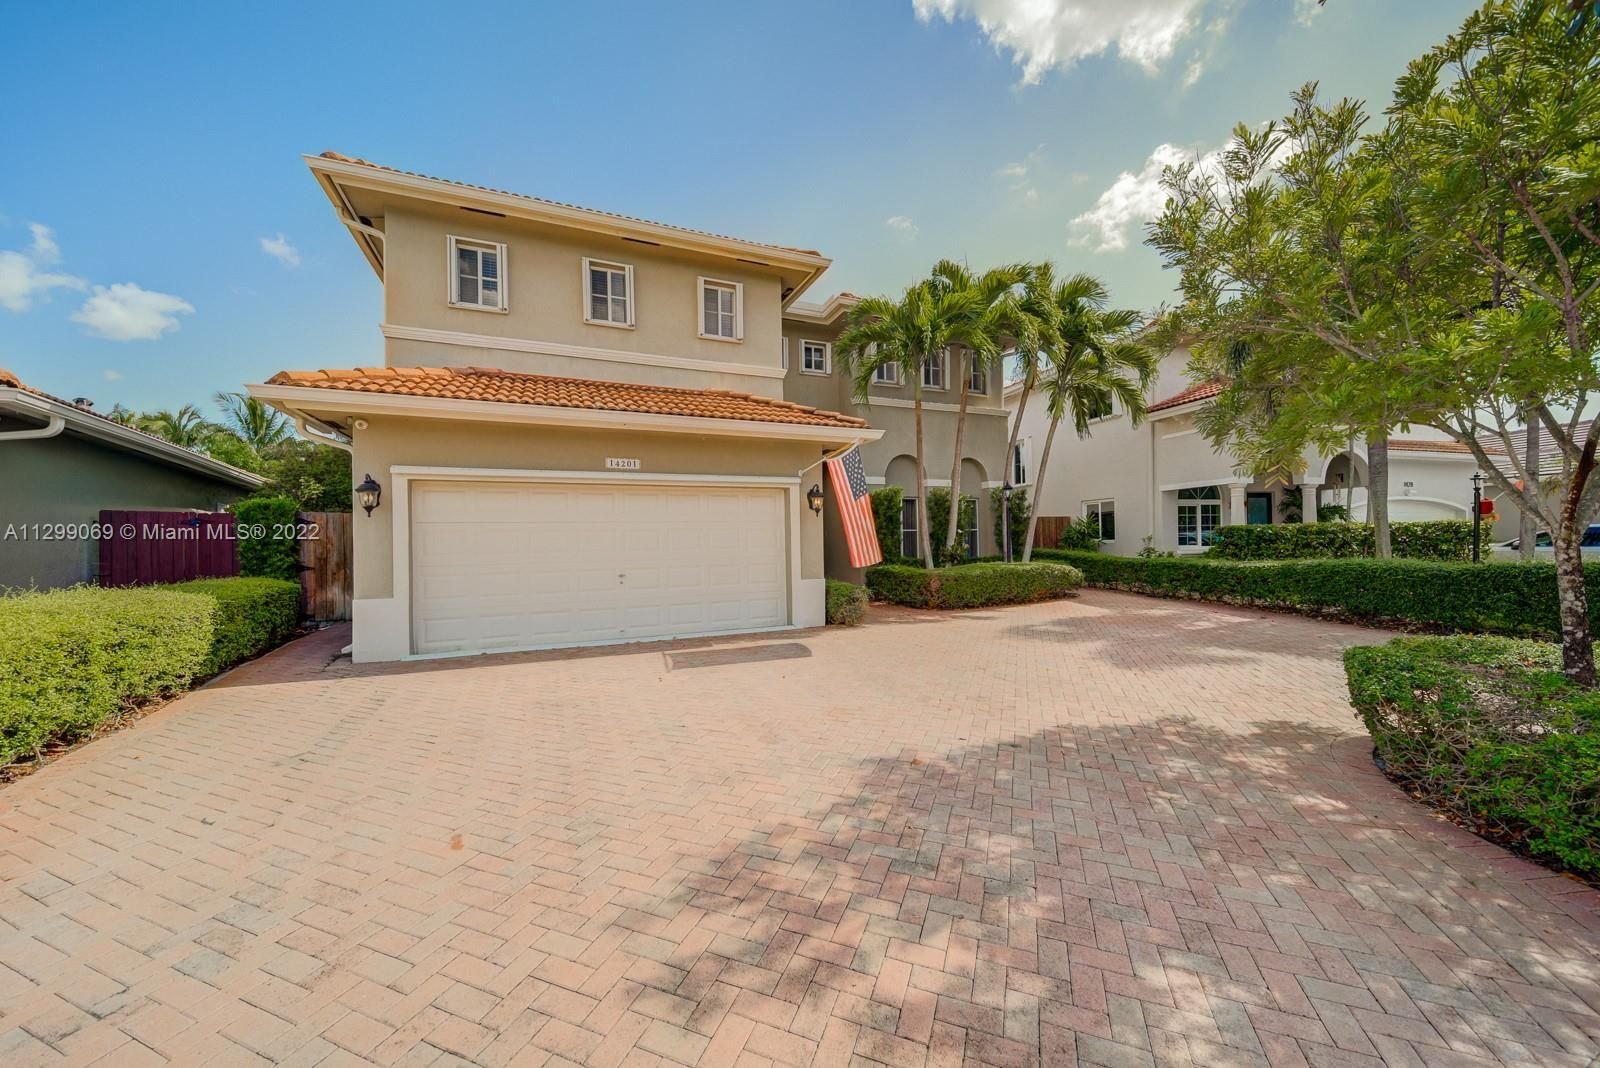 Real estate property located at 14201 130th Ave, Miami-Dade County, Miami, FL